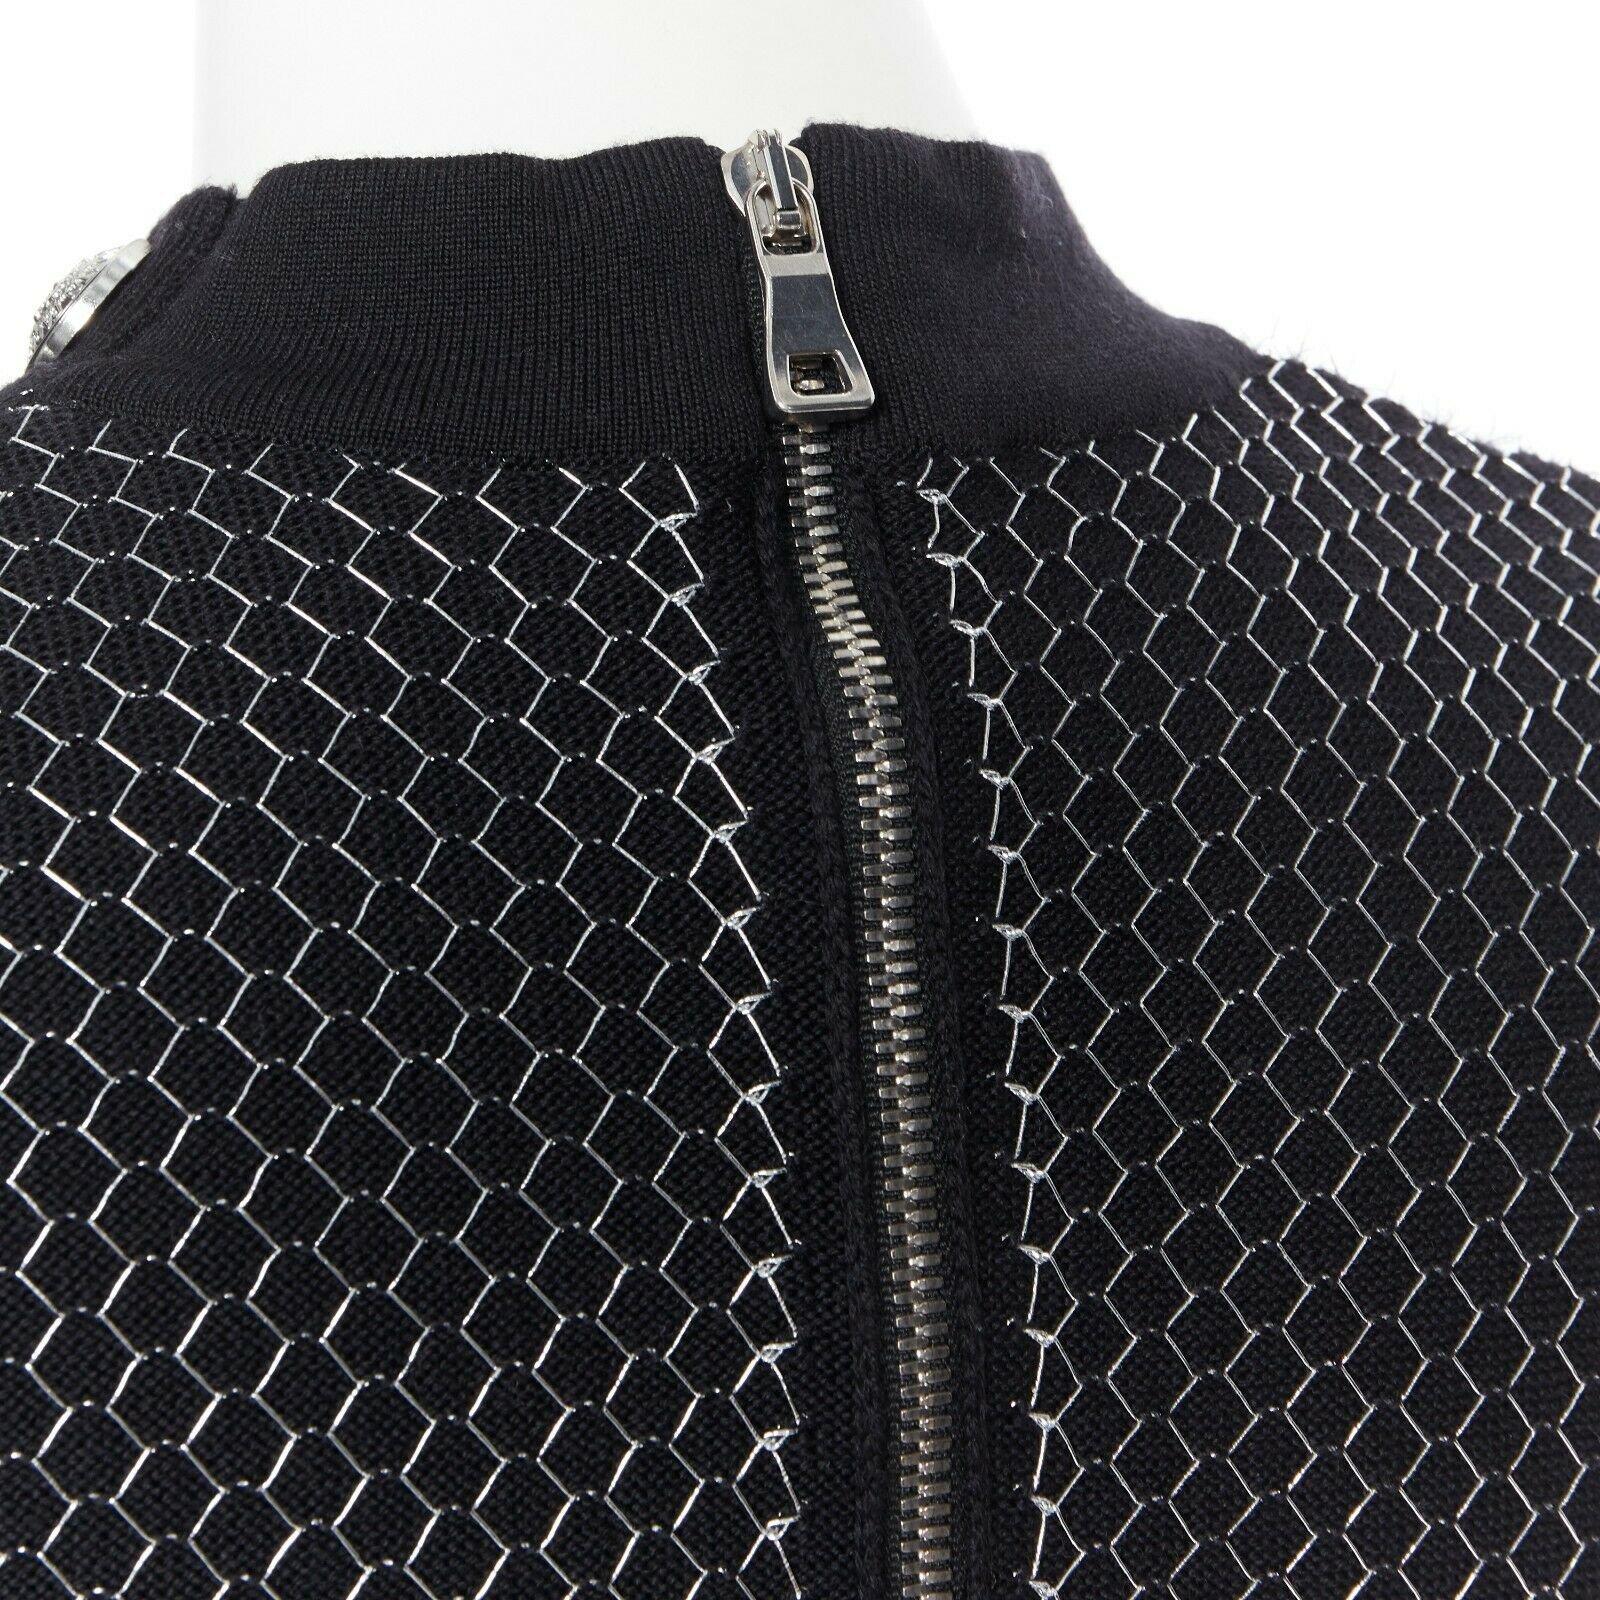 BALMAIN ROUSTEING black silver thread fluffy military button bodycon dress S 4